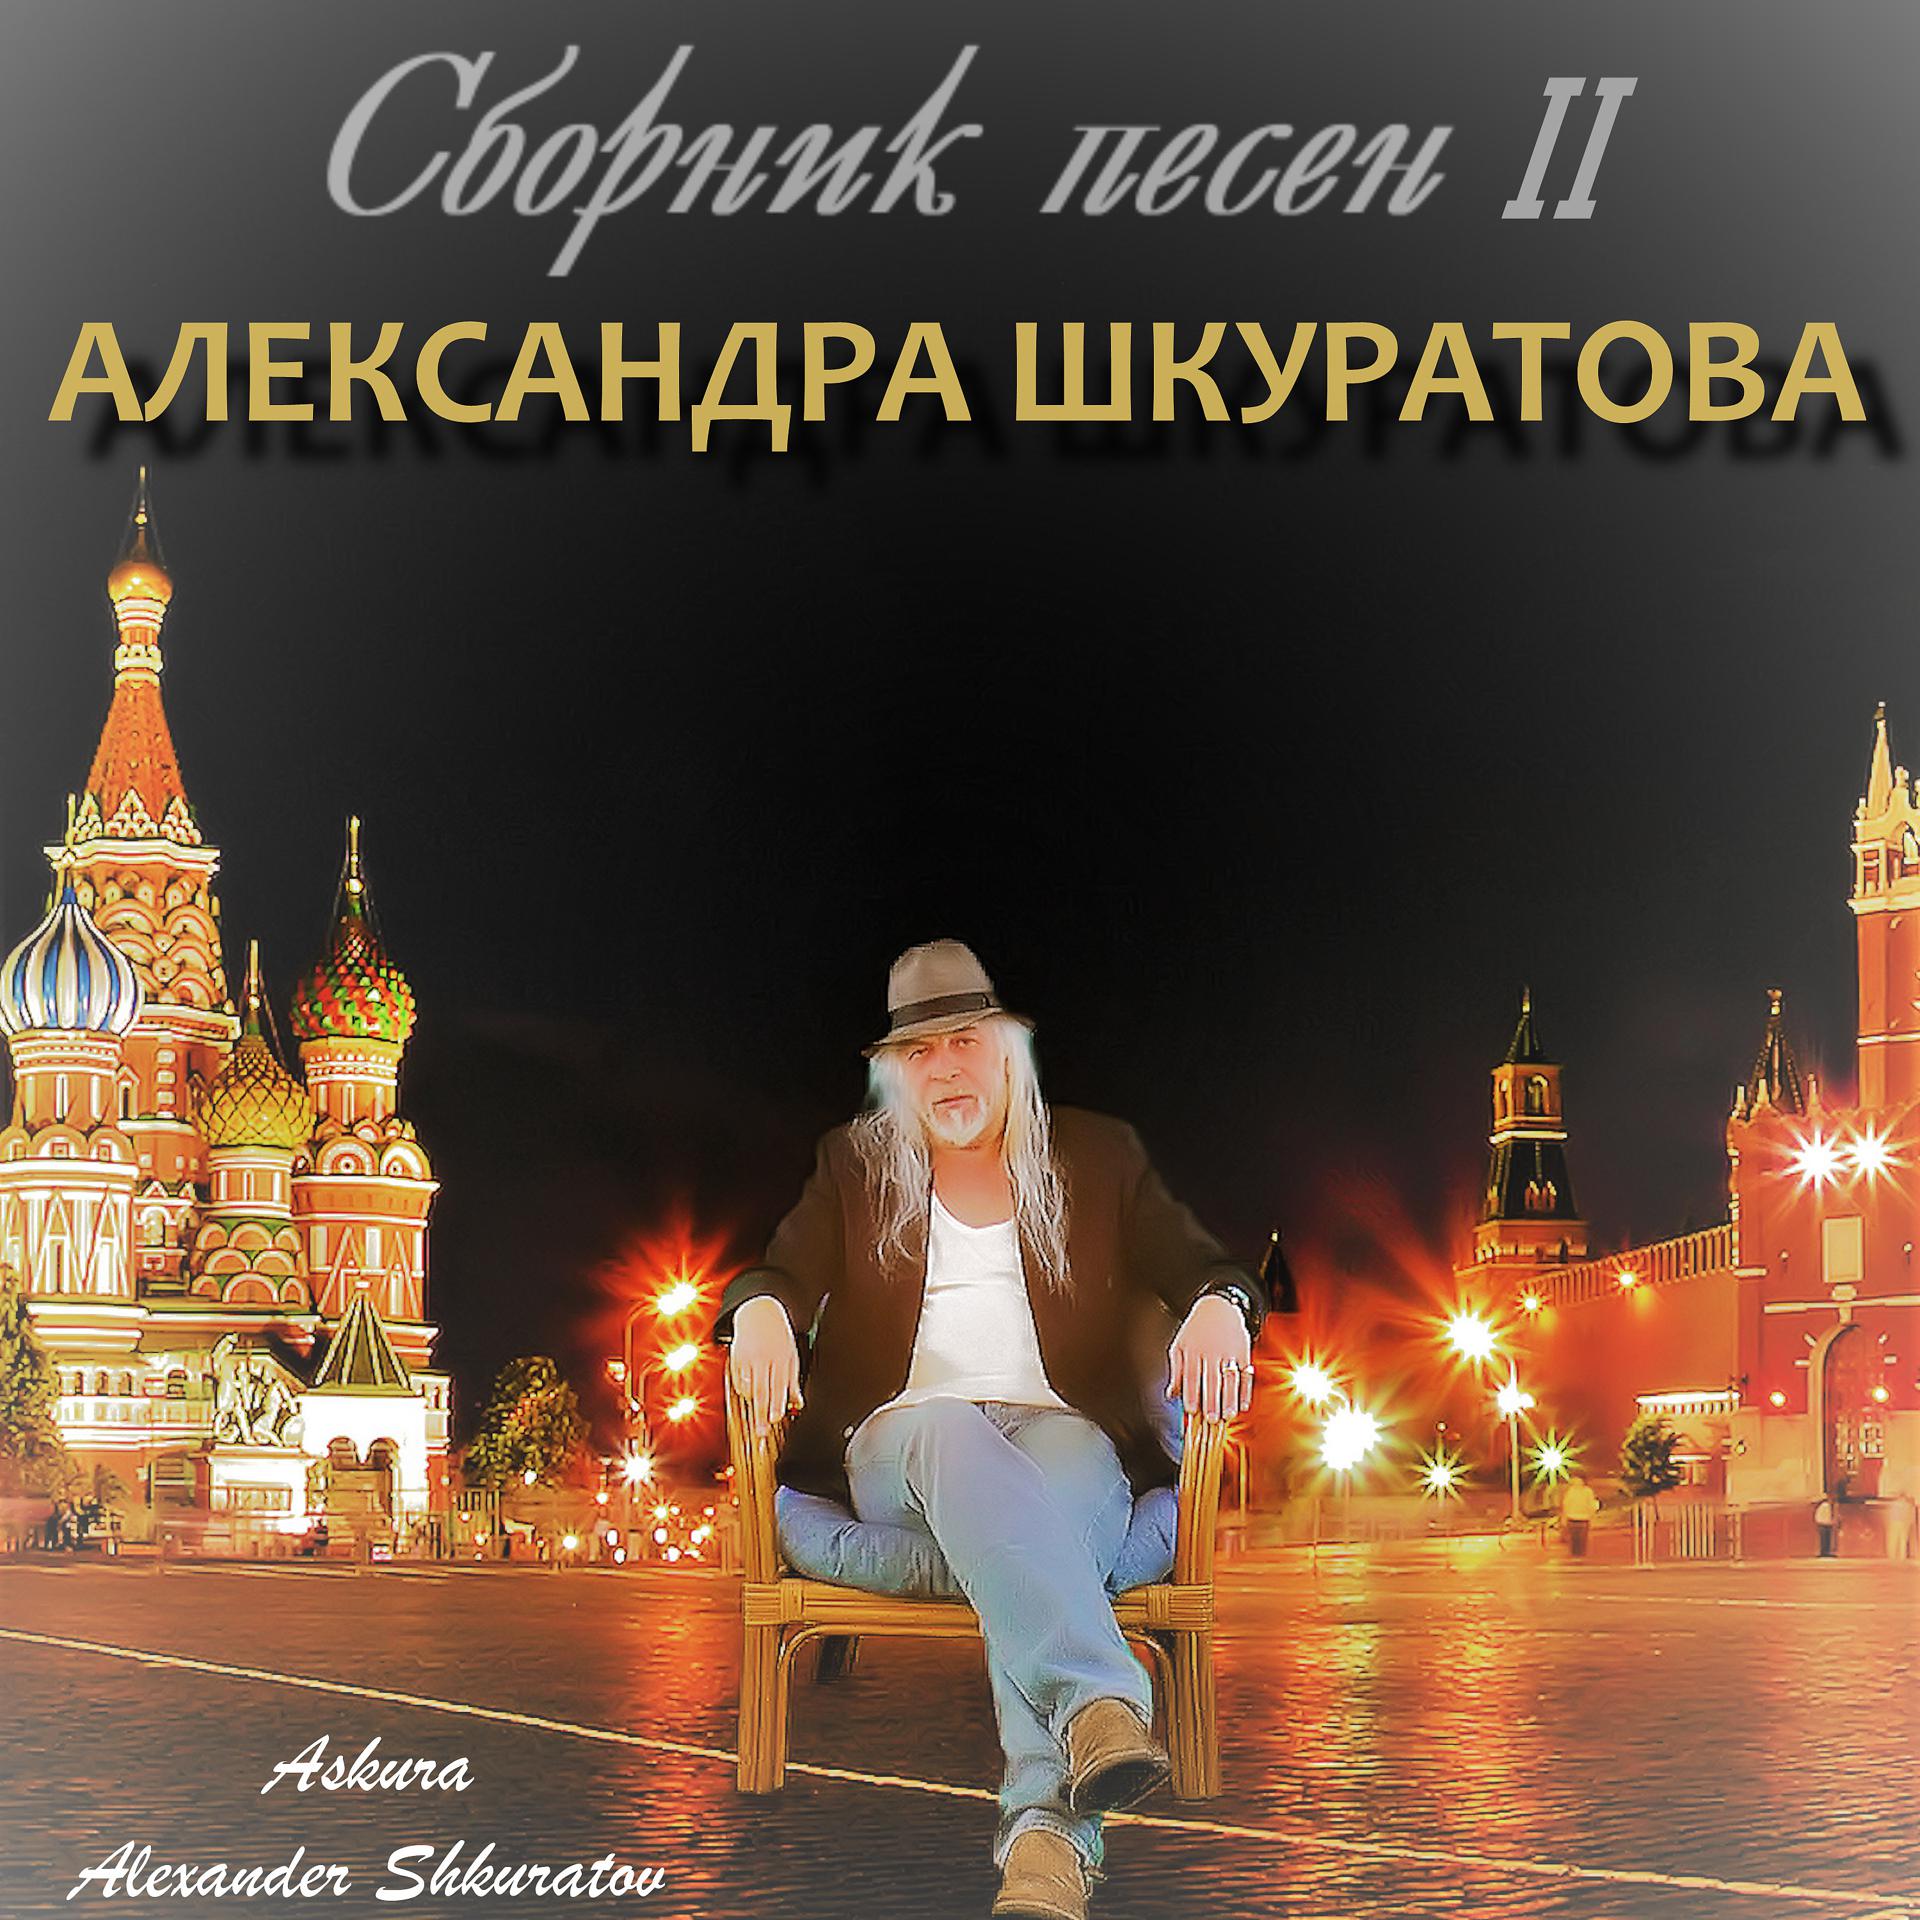 Постер к треку Askura Alexander Shkuratov, Анжелика Агурбаш - Птица